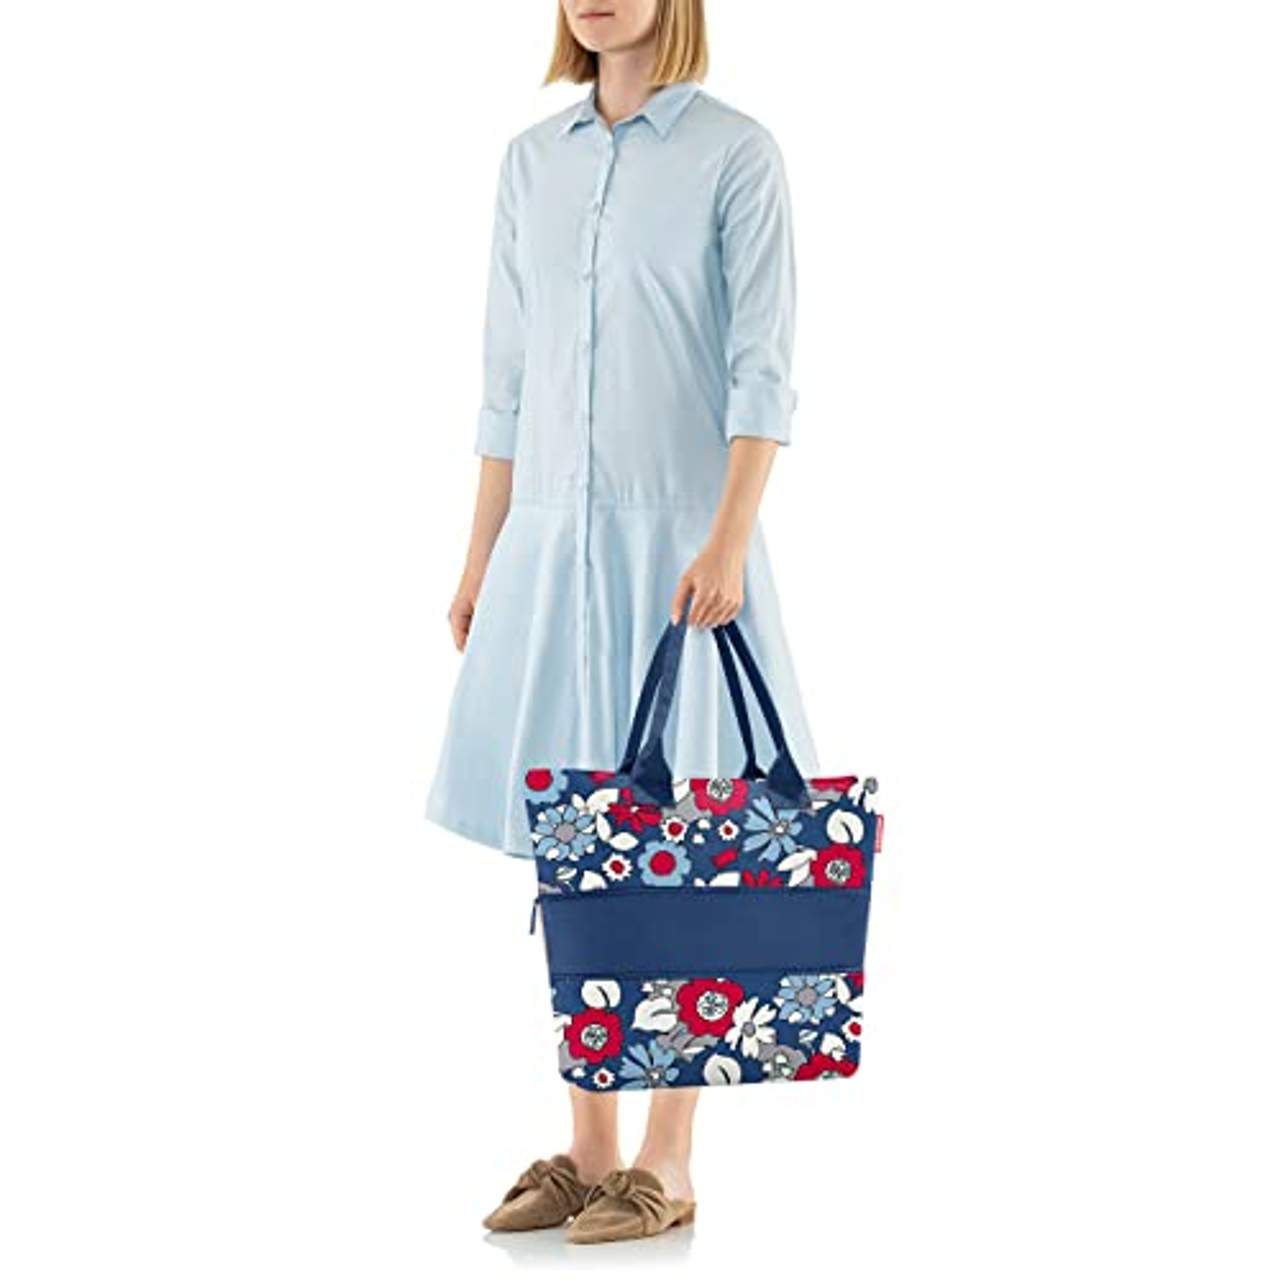 reisenthel shopper e1 Großraumtasche aus hochwertigem Polyestergewebe